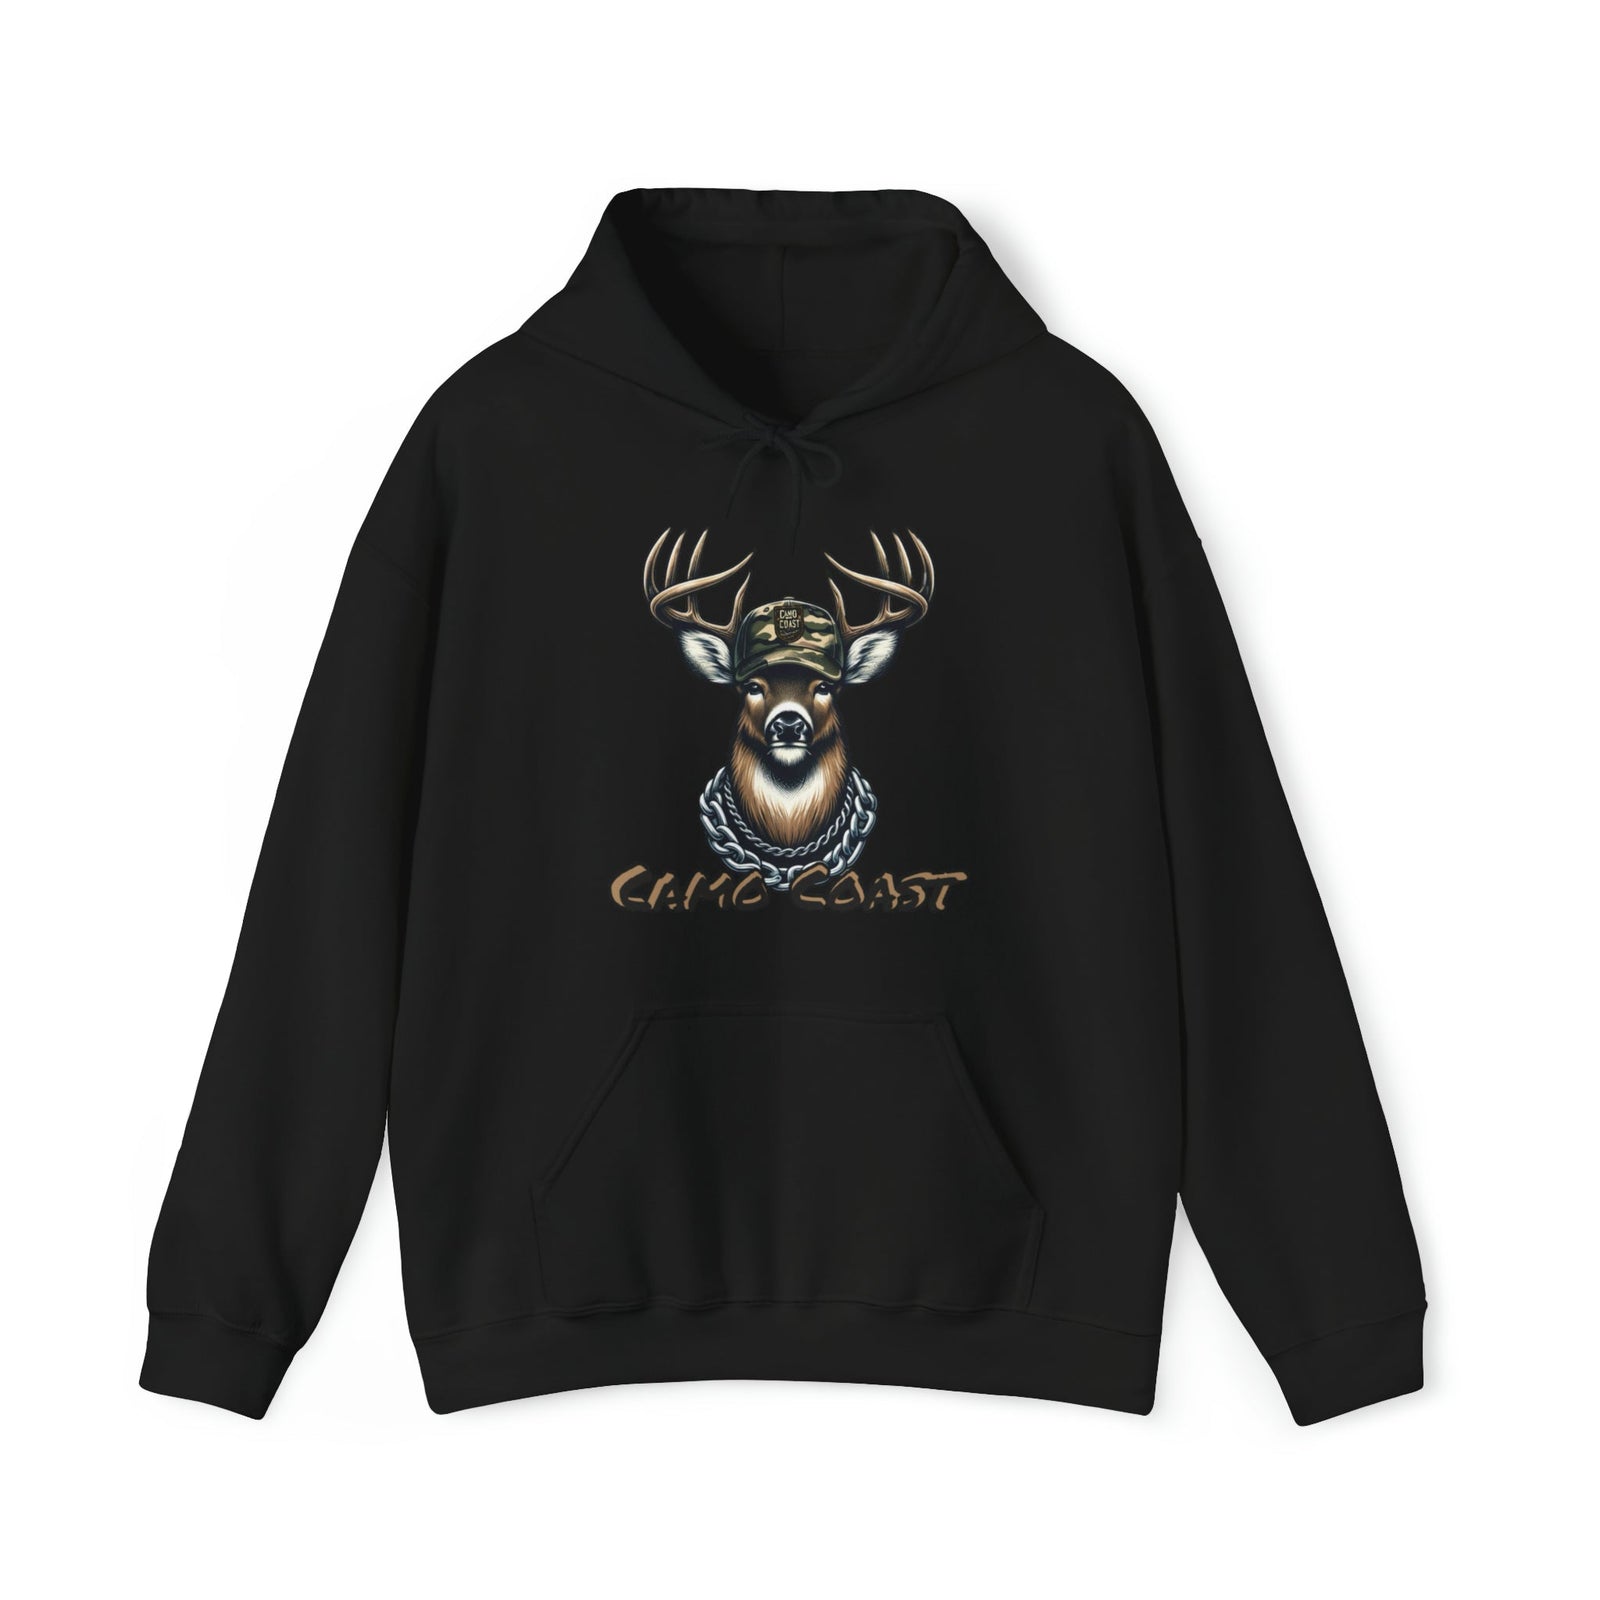  Big Bucks Black Hoodie - Camo Coast